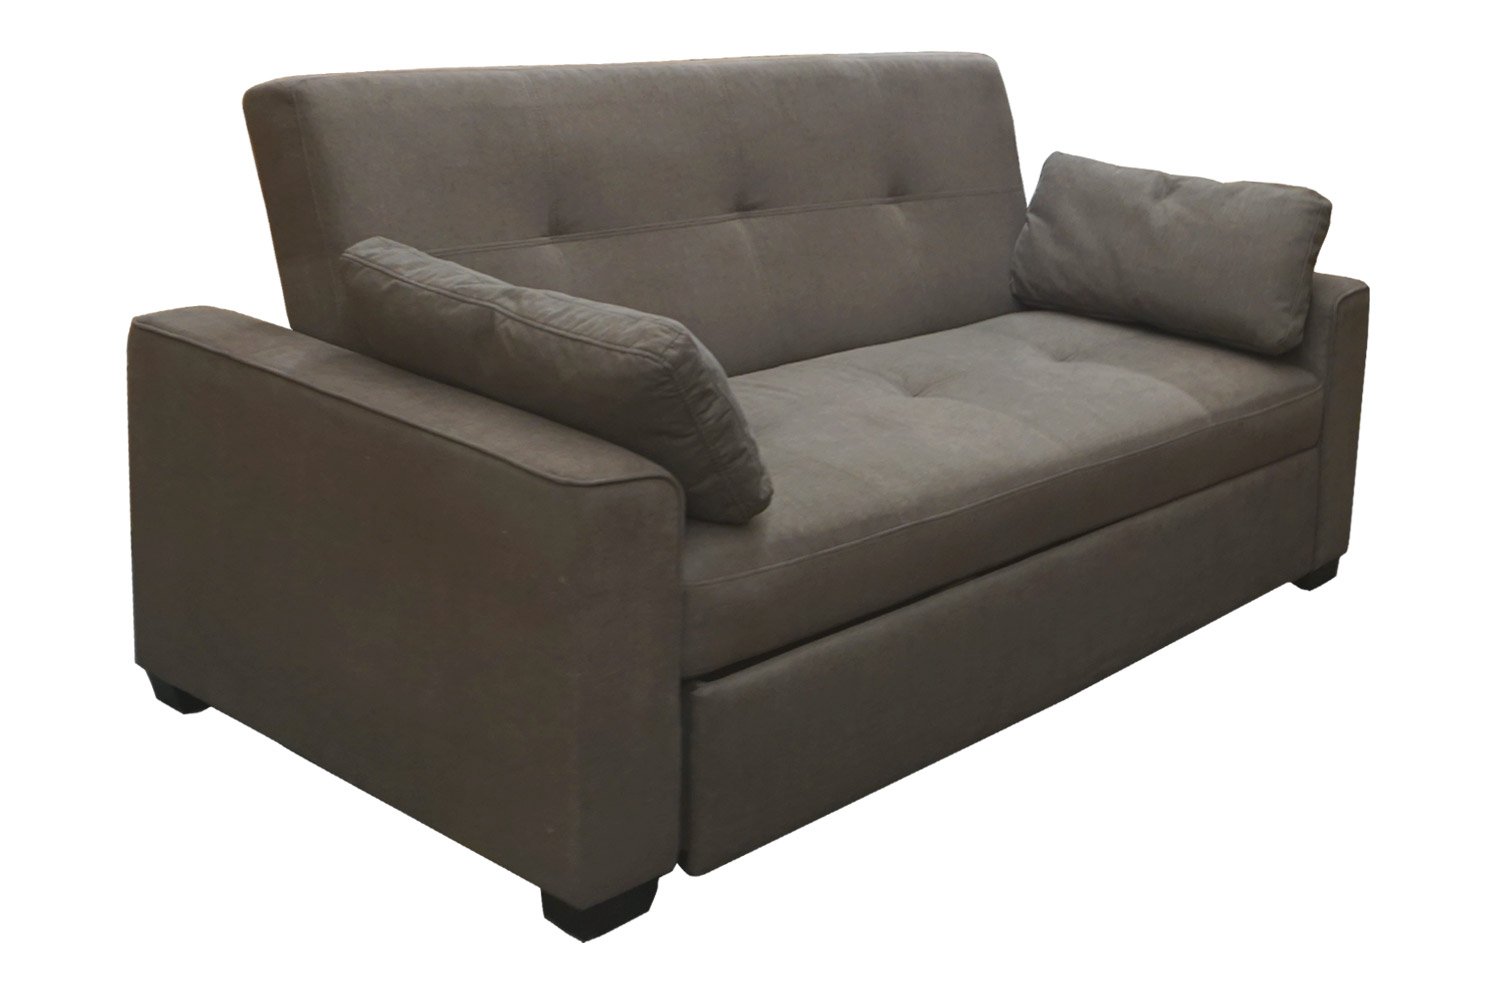 eco-sofa latex upholstered sofa bed